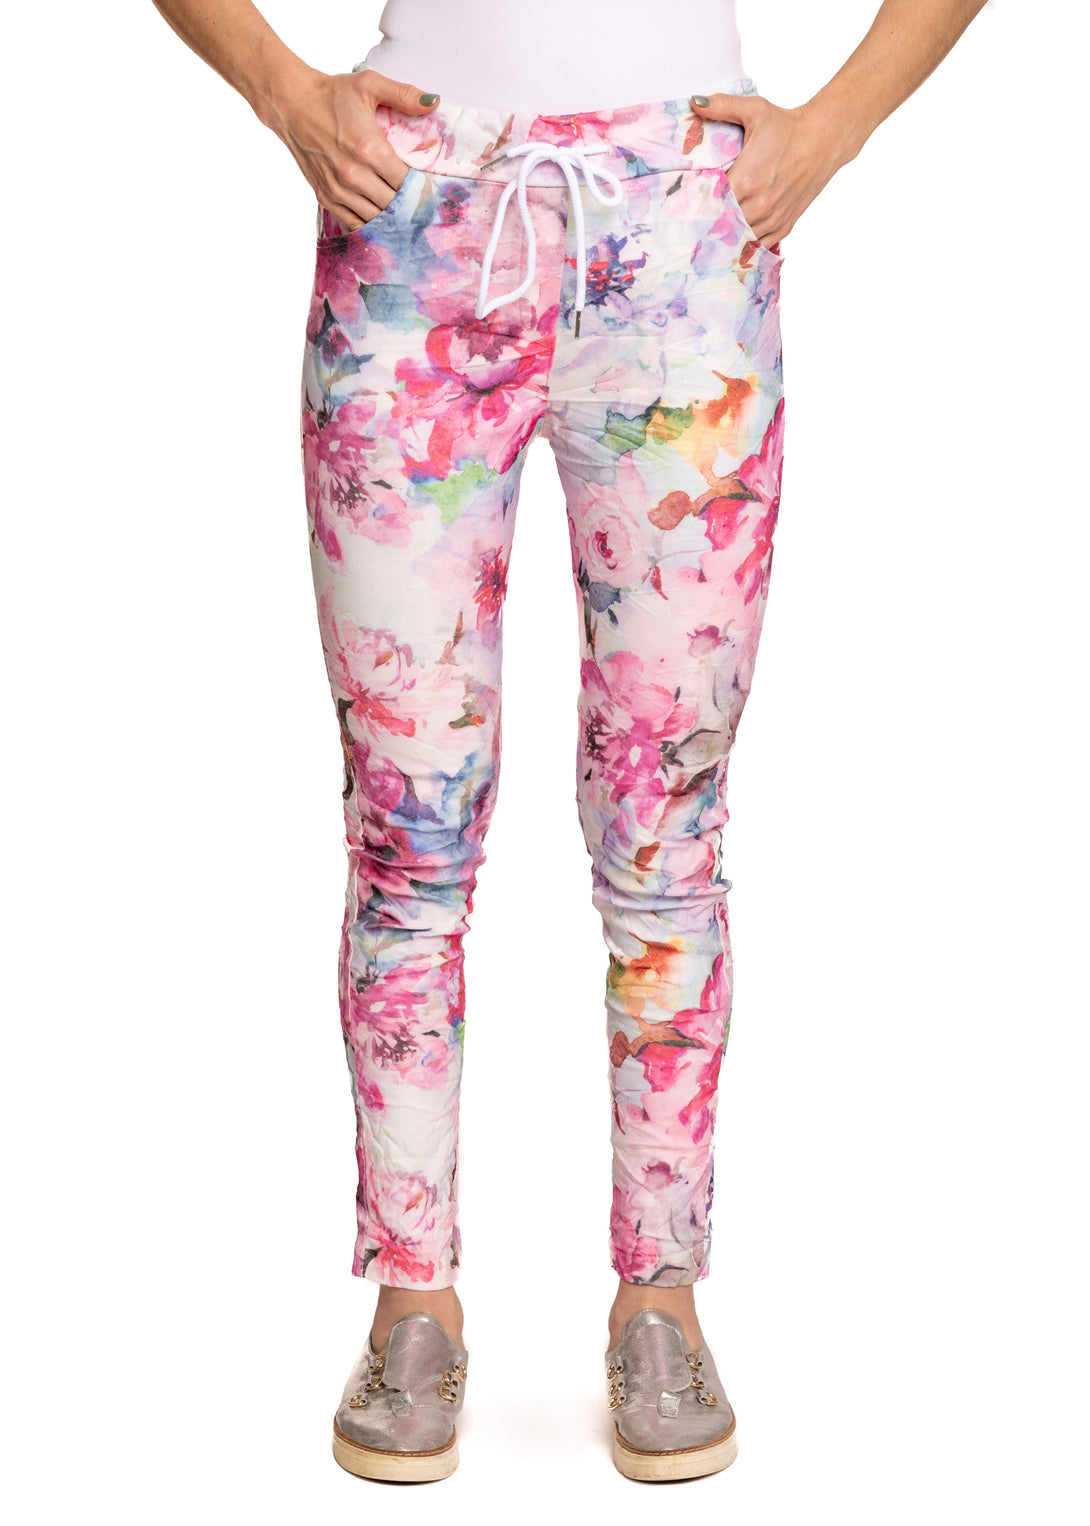 Skylee Pants in Petal Pink - Imagine Fashion